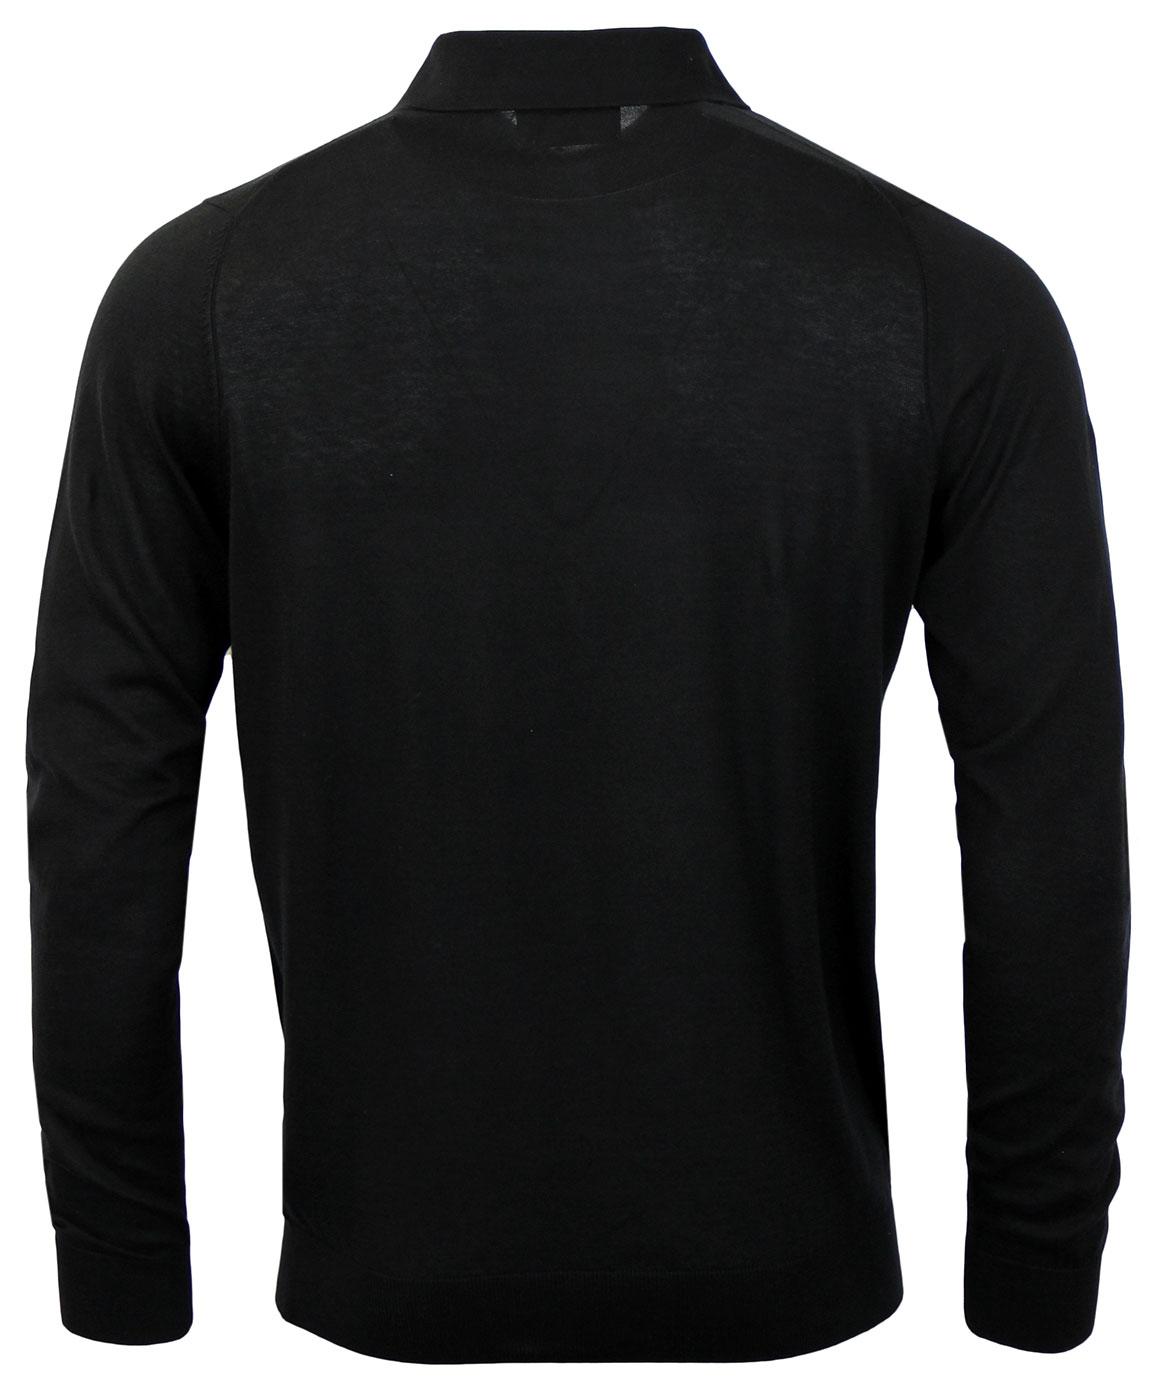 ALAN PAINE Sudbrooke Retro 60s Mod Fine Knit Polo Shirt Black